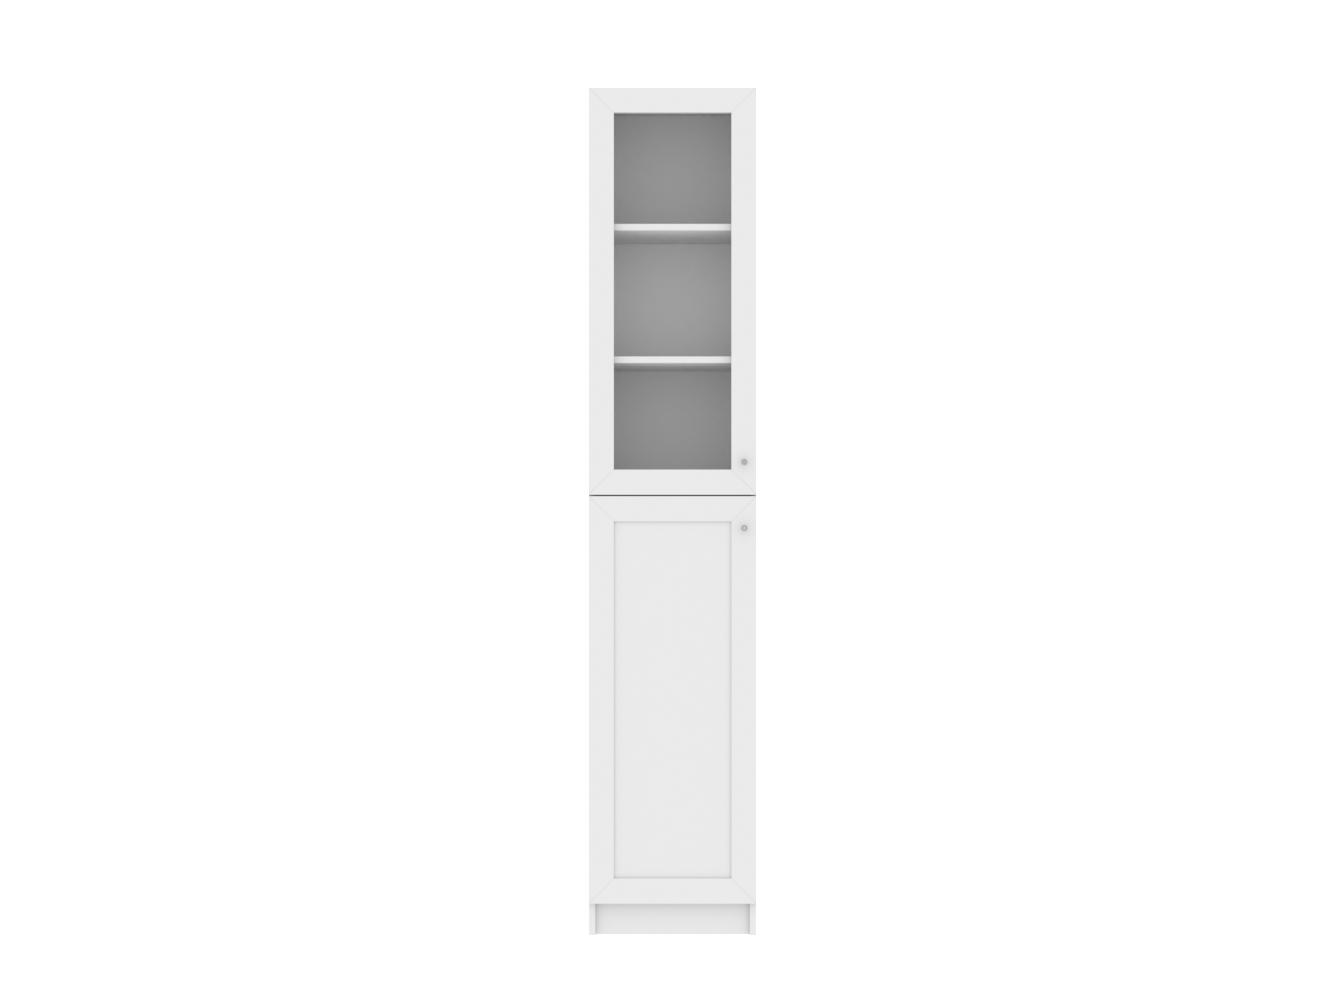  Книжный шкаф Билли 330 white ИКЕА (IKEA) изображение товара